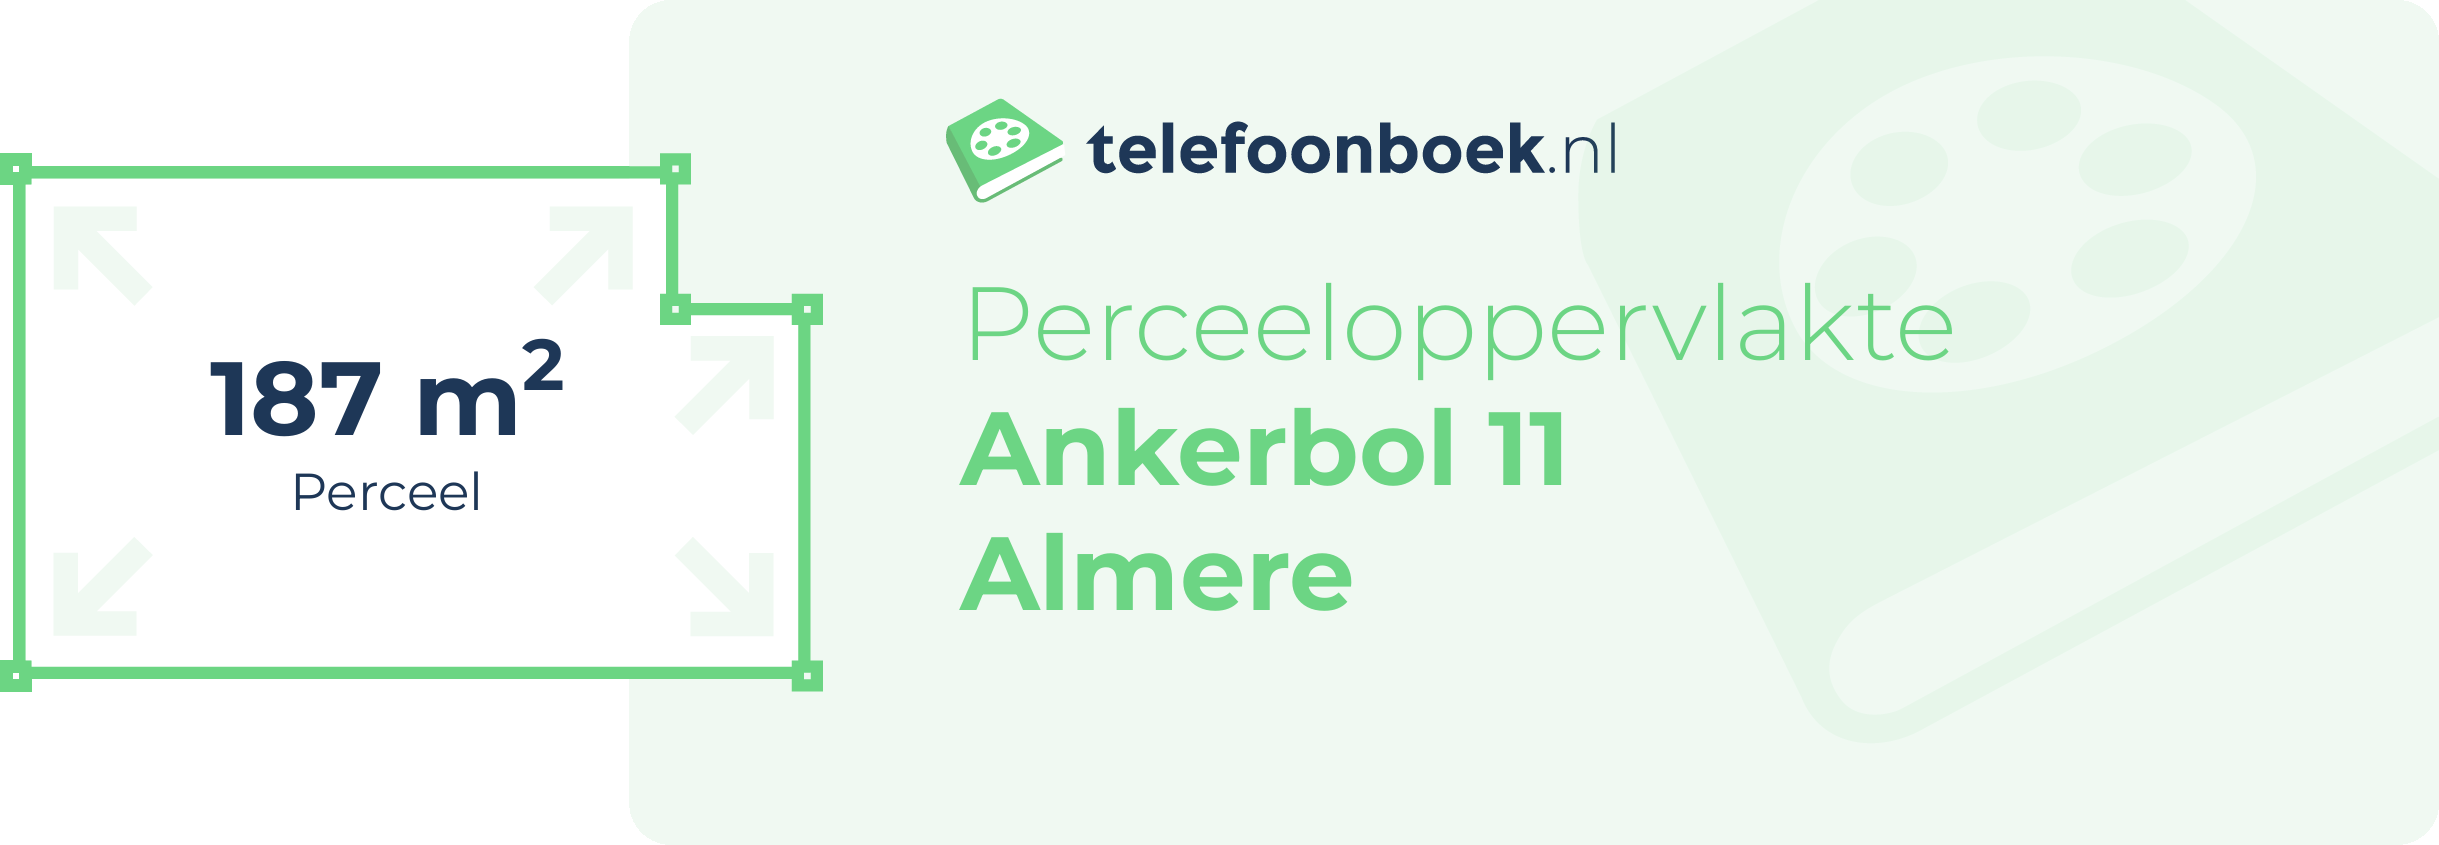 Perceeloppervlakte Ankerbol 11 Almere